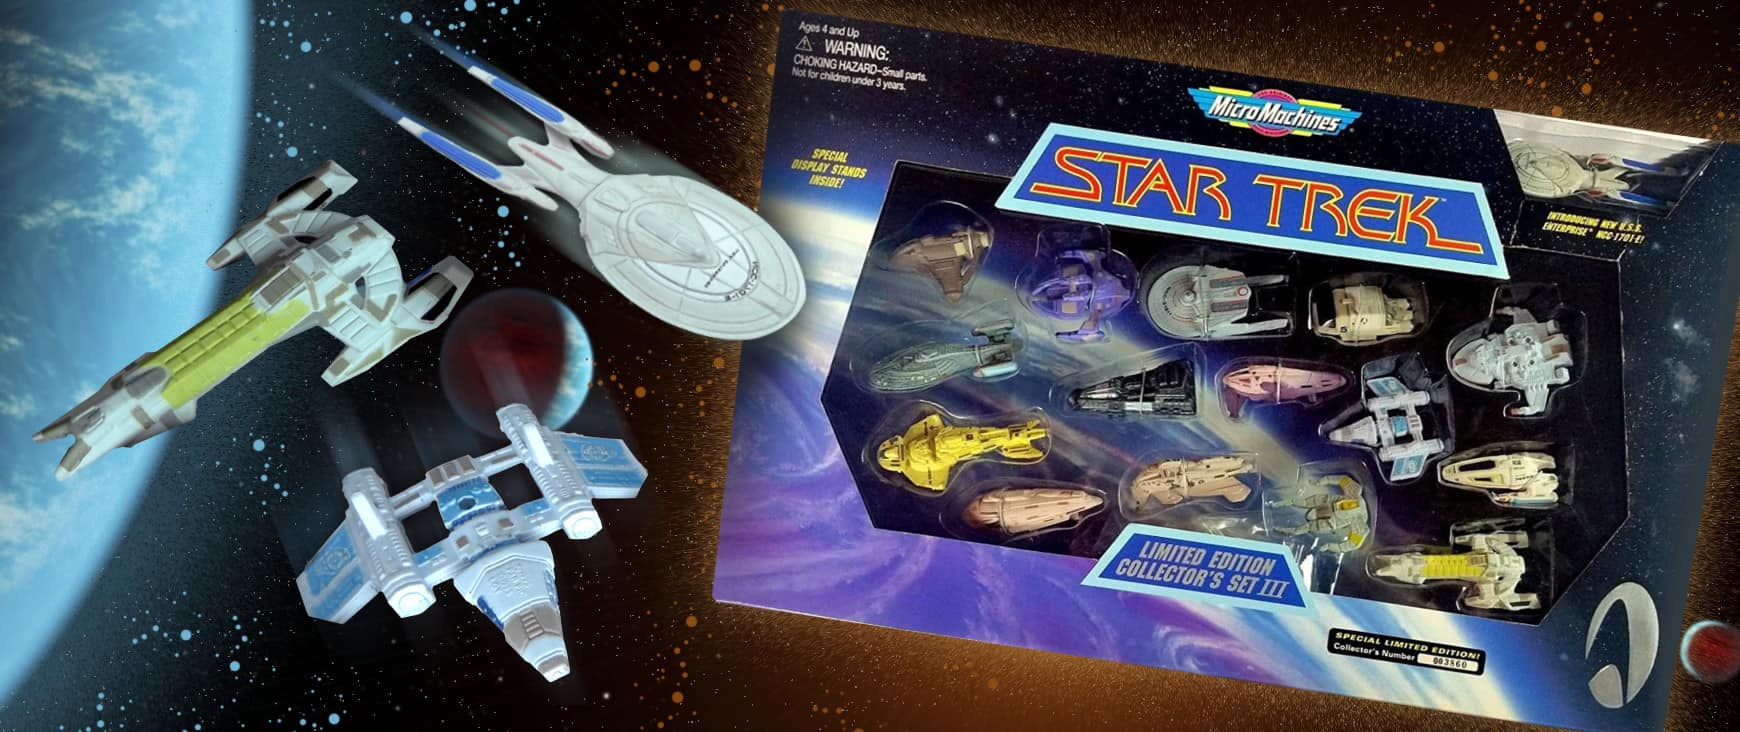 Star Trek Limited Edition Collectors Set III released 1995